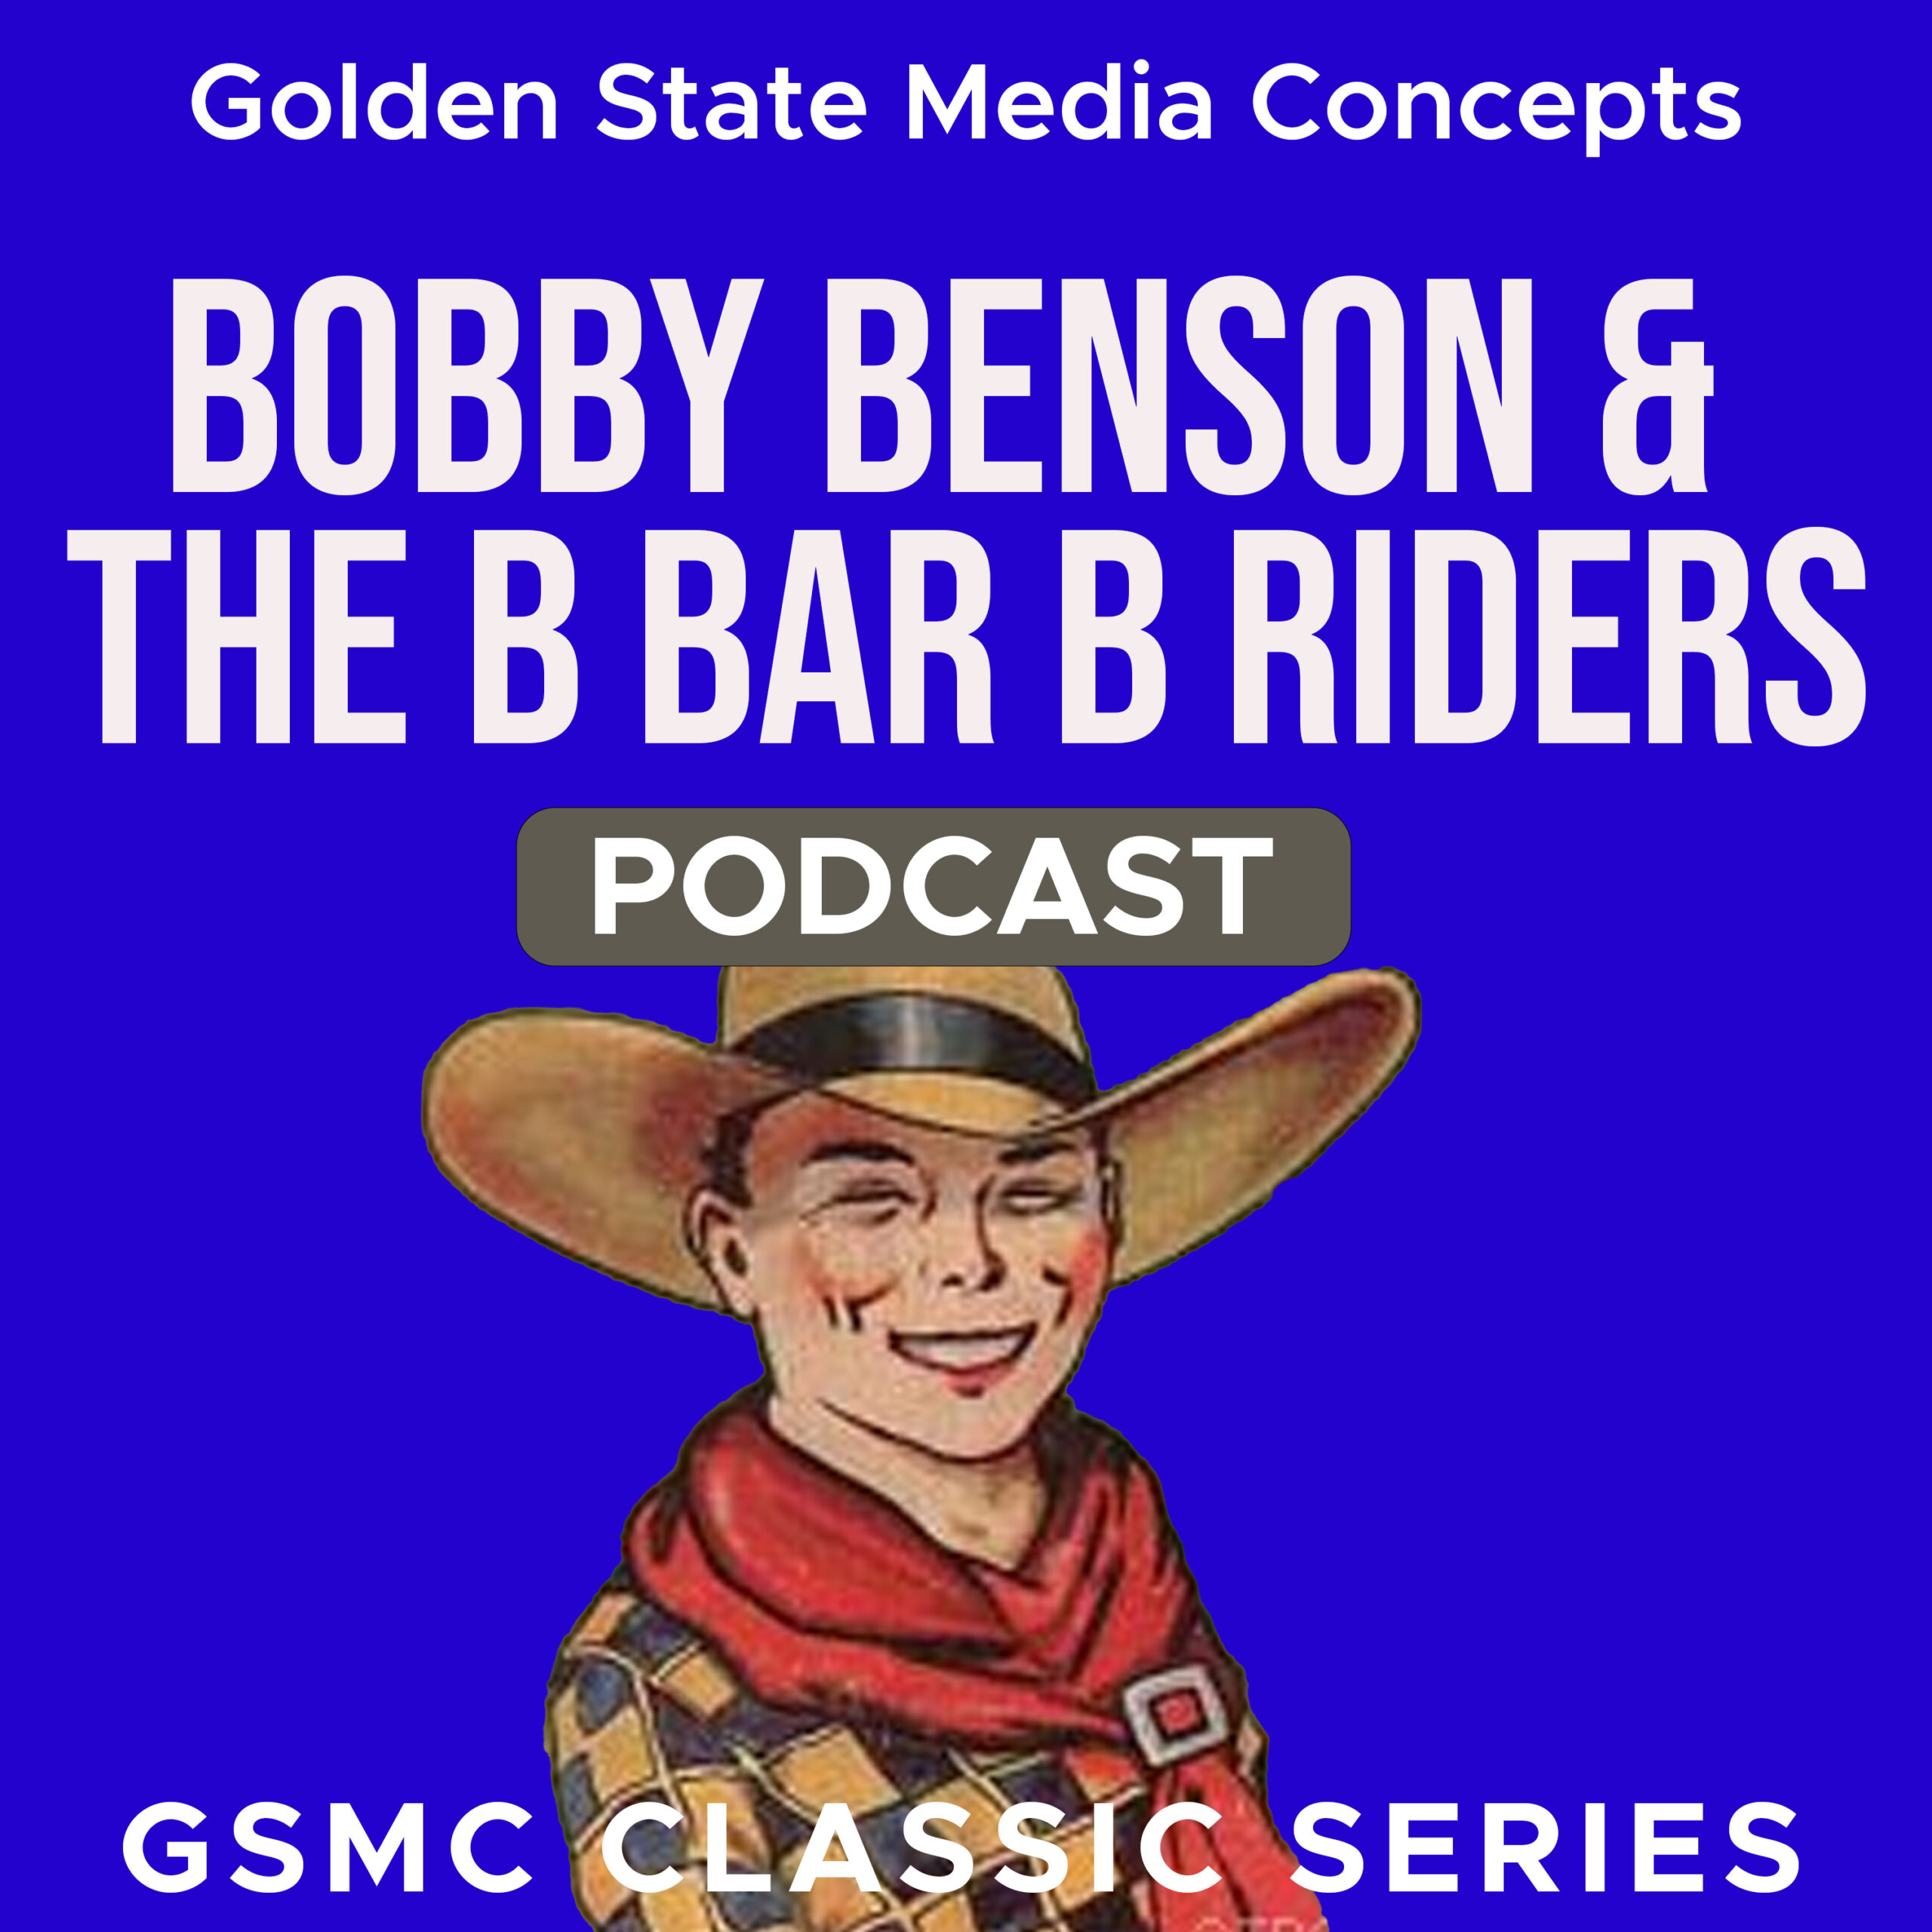 GSMC Classics: Bobby Benson & The B Bar B Riders